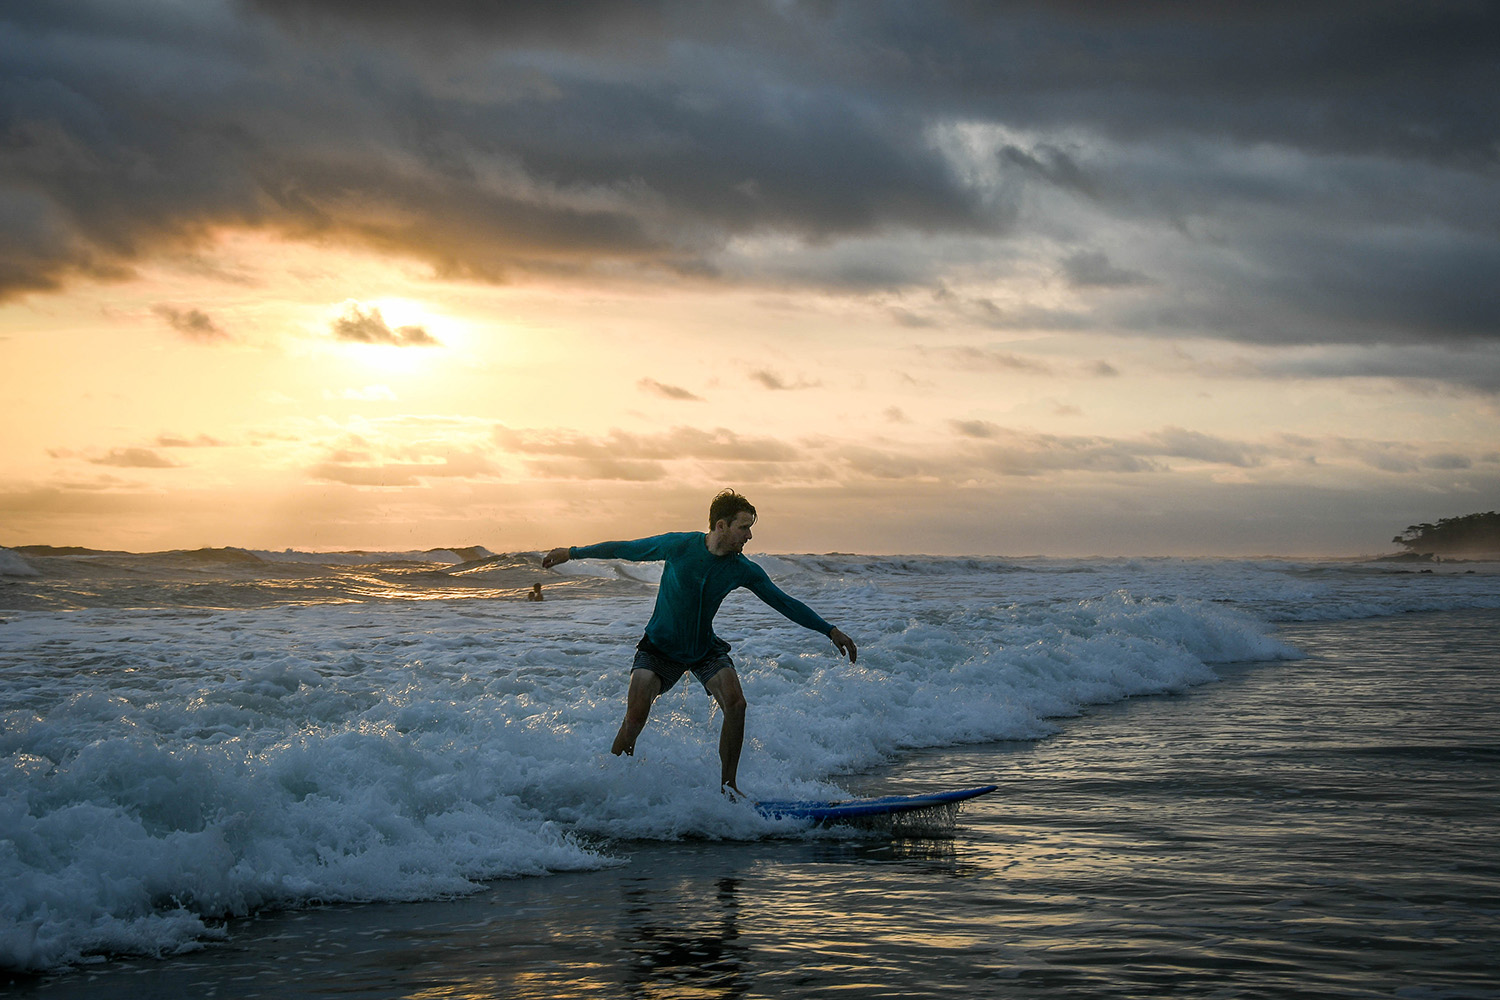 Surfing in Costa Rica